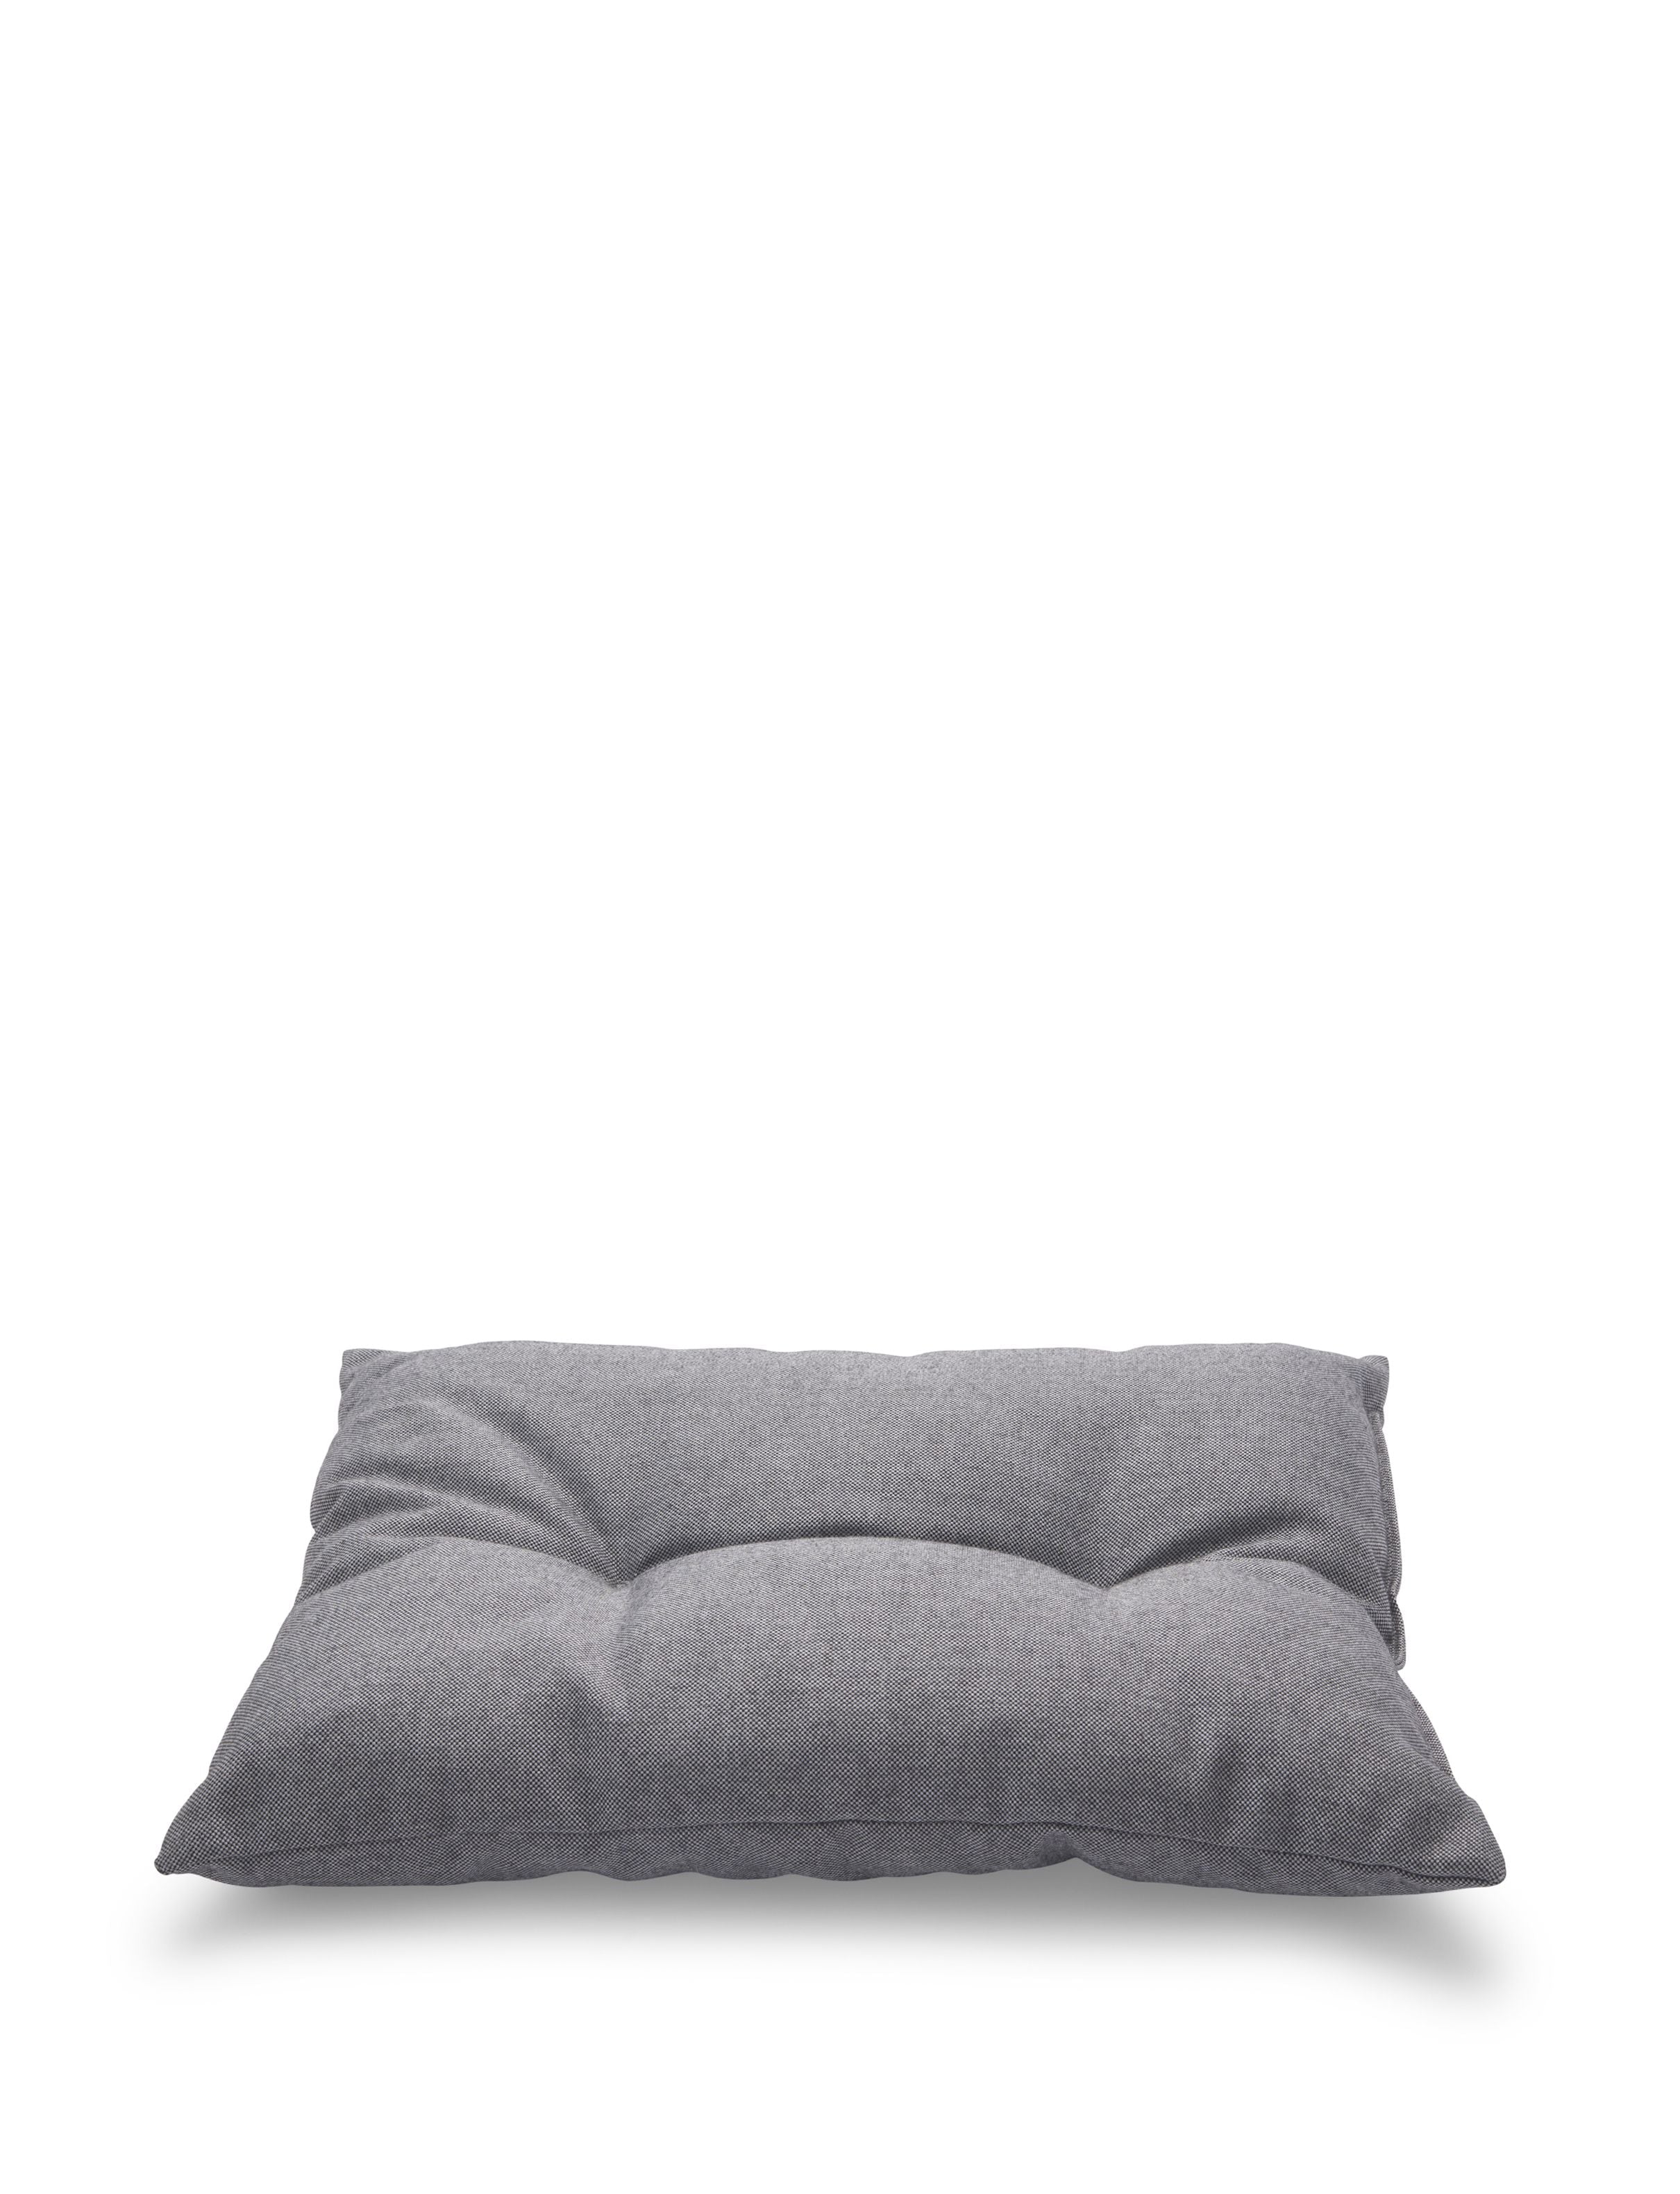 Skagerak Barriere Cushion 55x43 cm, cendre